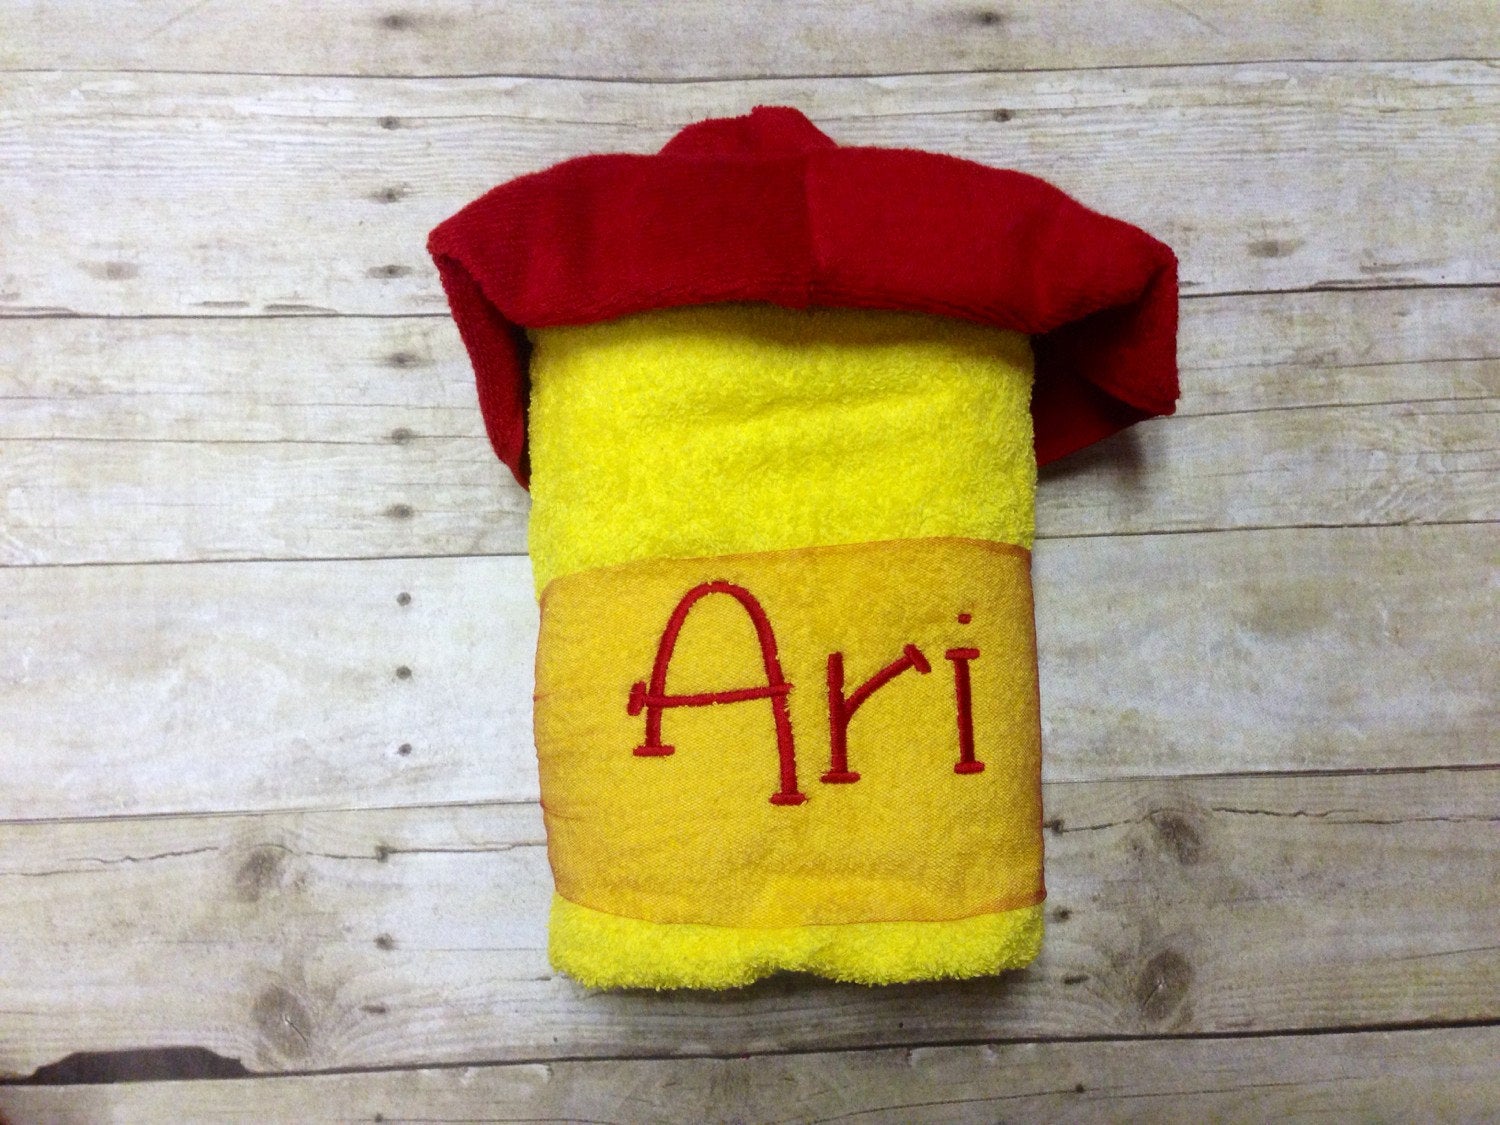 Winnie the Pooh 3D Hooded Bath Towel - Kids Kute Kreations, Inc.